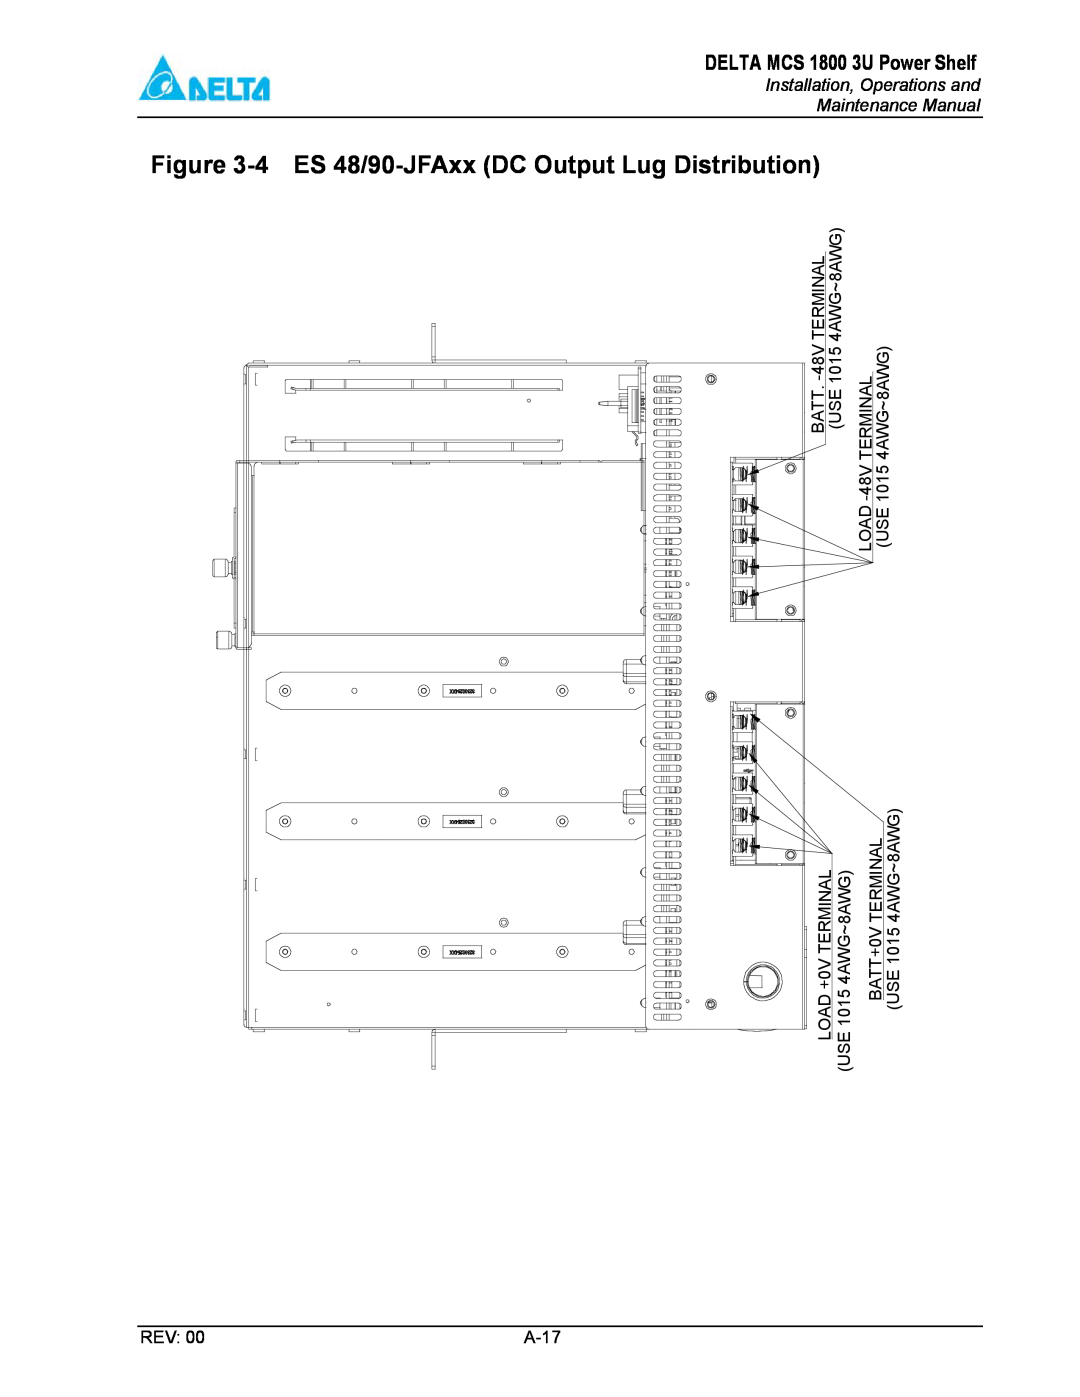 Delta MCS-1800 manual 4 ES 48/90-JFAxx DC Output Lug Distribution, DELTA MCS 1800 3U Power Shelf, 1015, Load, A-17 